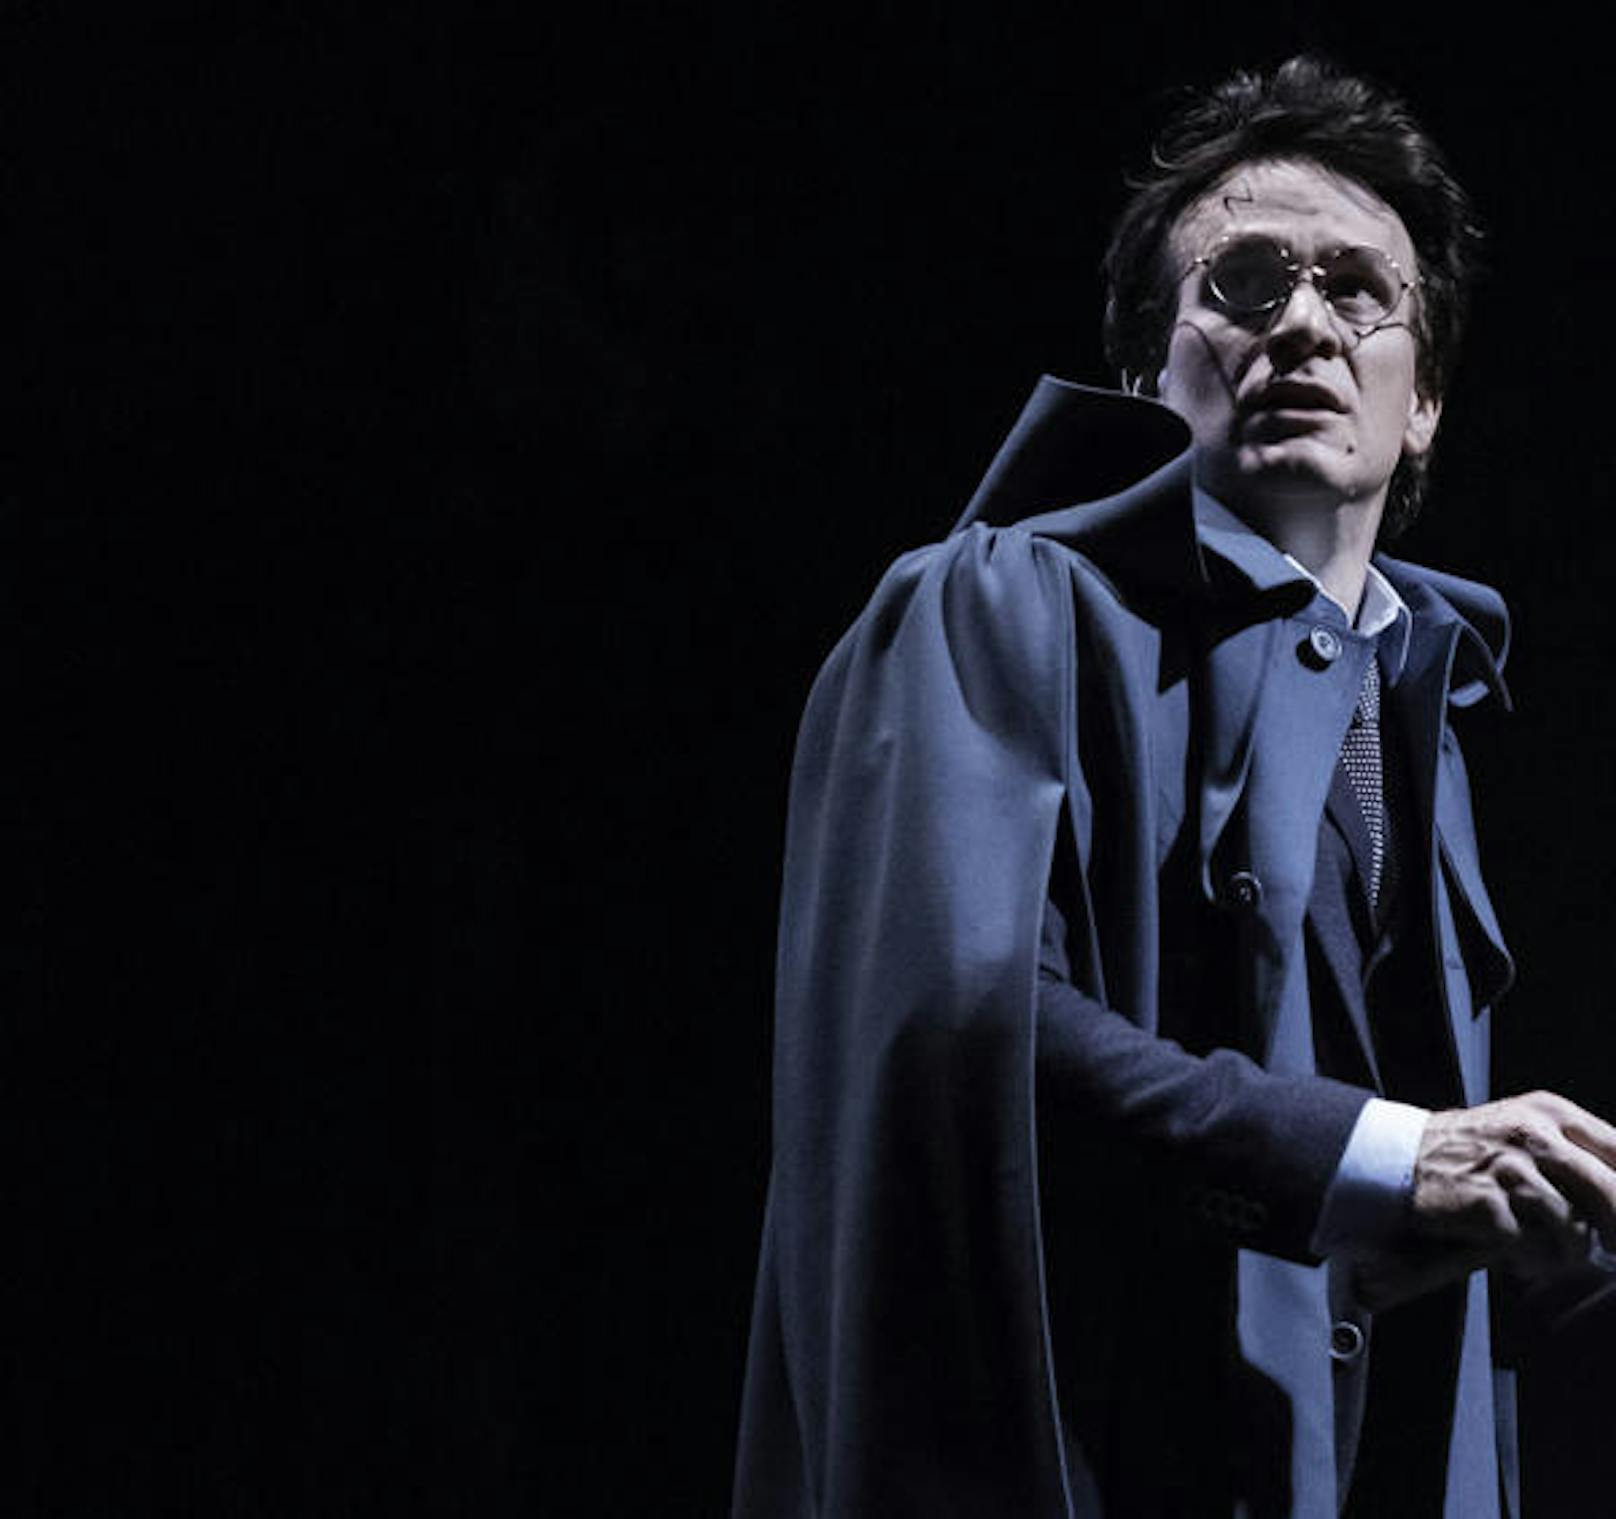 Harry Potter and the Cursed Child in London auf der Bühne